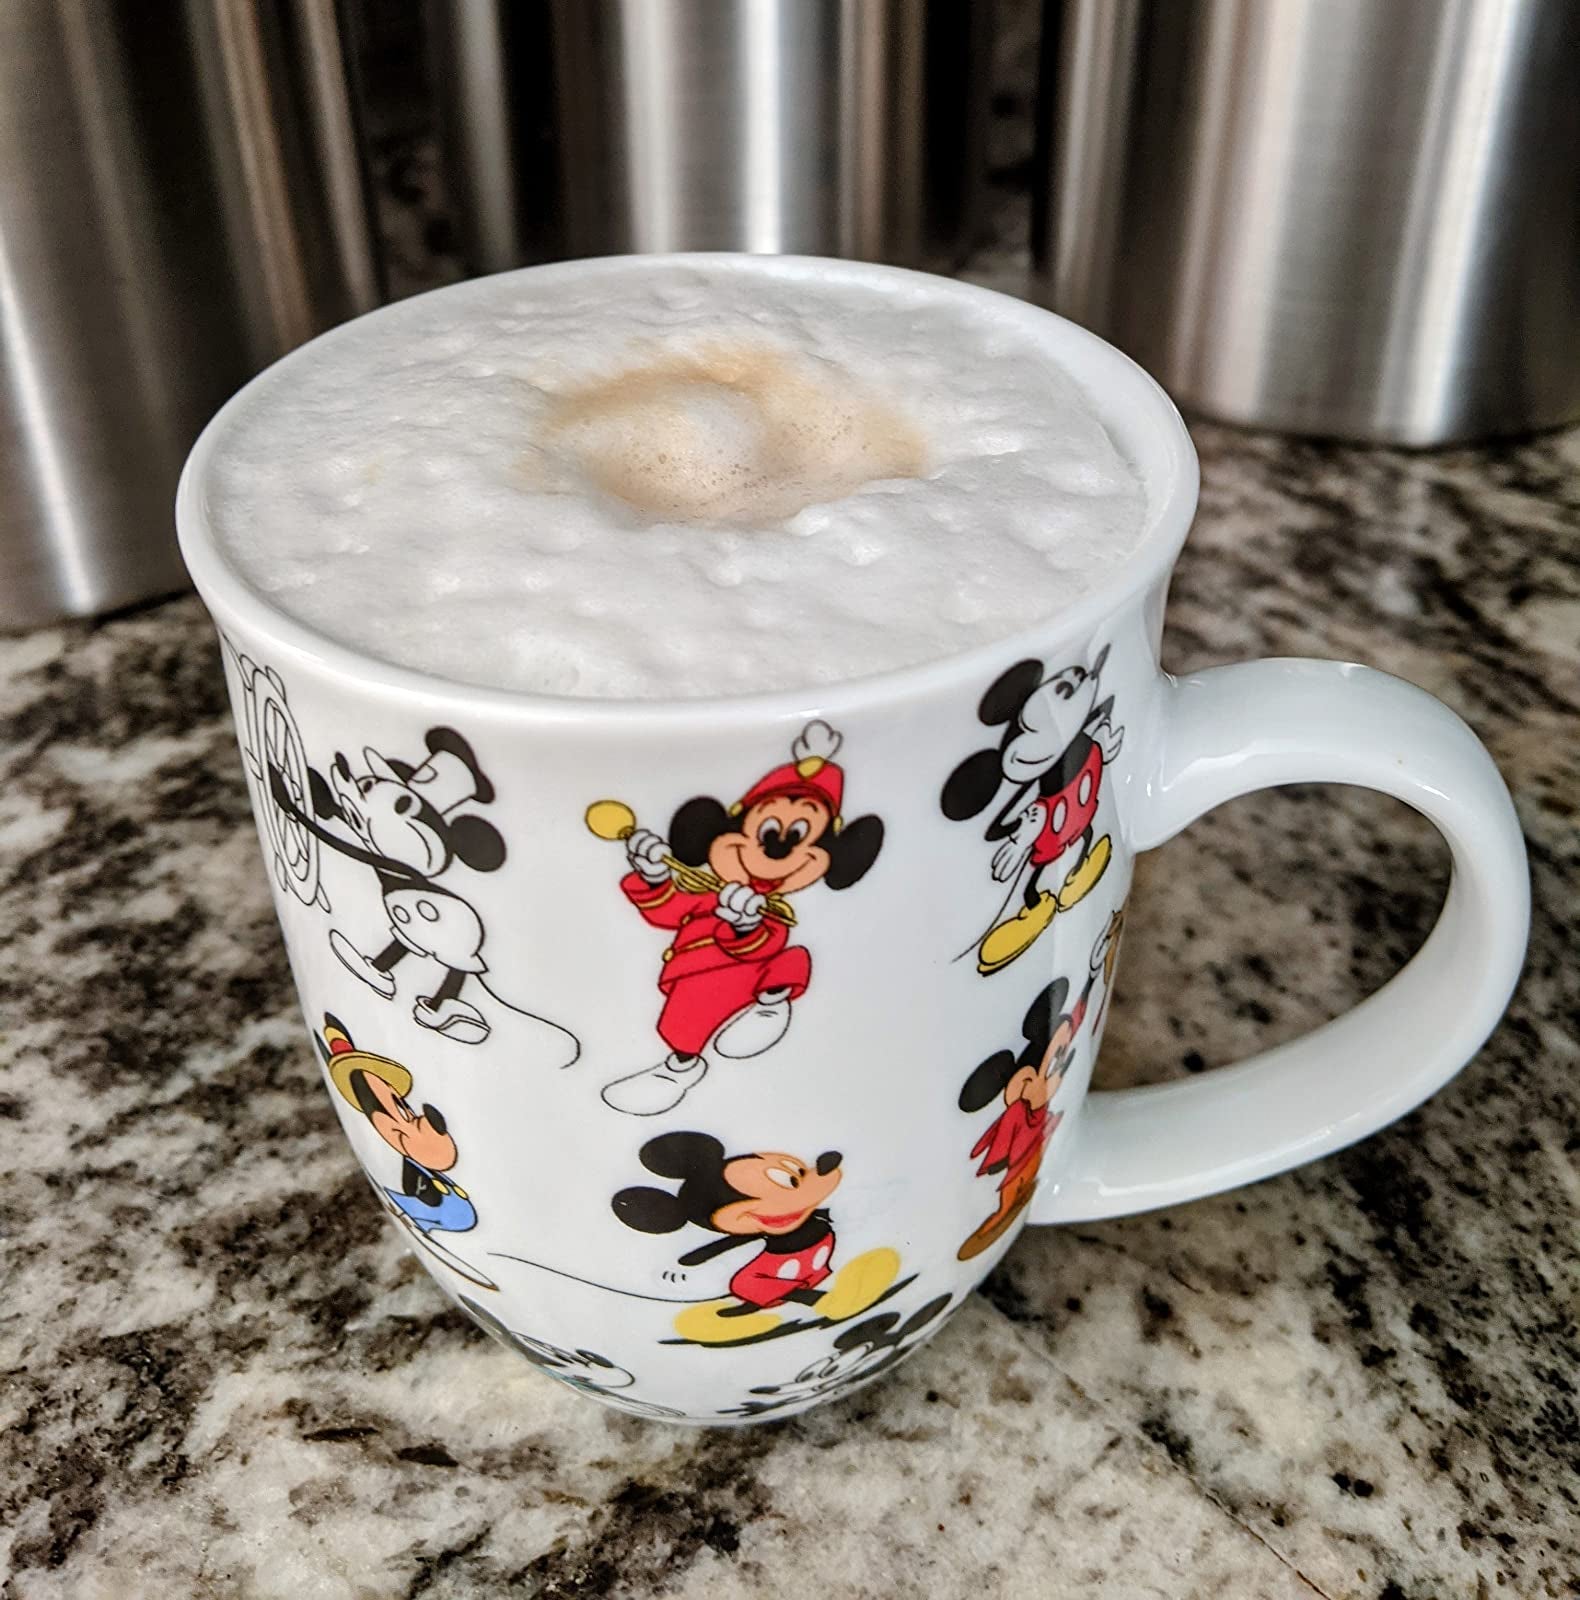 Disney Mickey Mouse Cartoon Mugs Coffee Cups Cute Minnie Mouse Daisy Milk  Breakfast Mugs Kawaii Tea Cup Set Family Cup